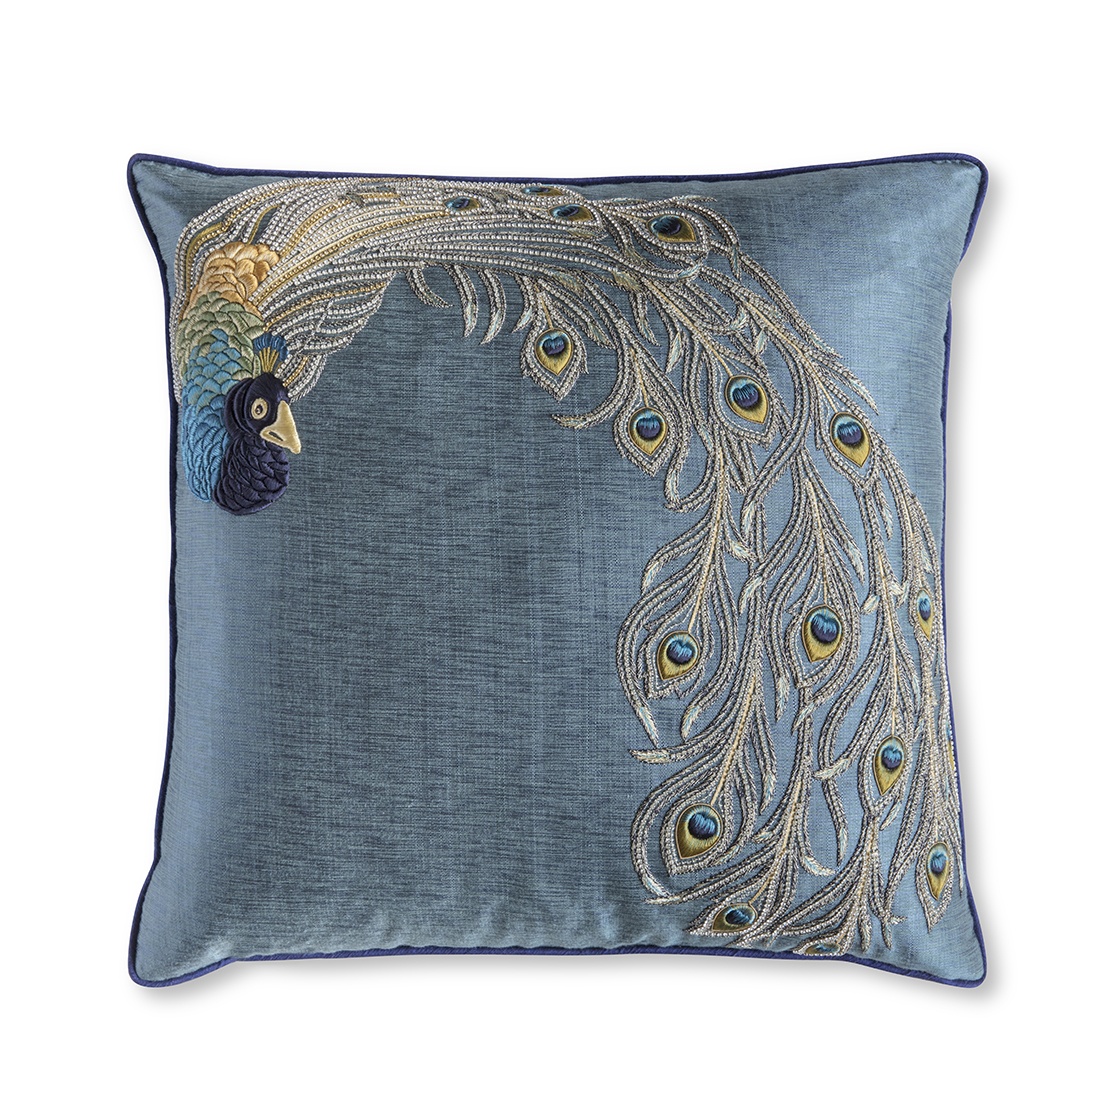 Pavo cushion in Lagan silk - Starling - Beaumont & Fletcher